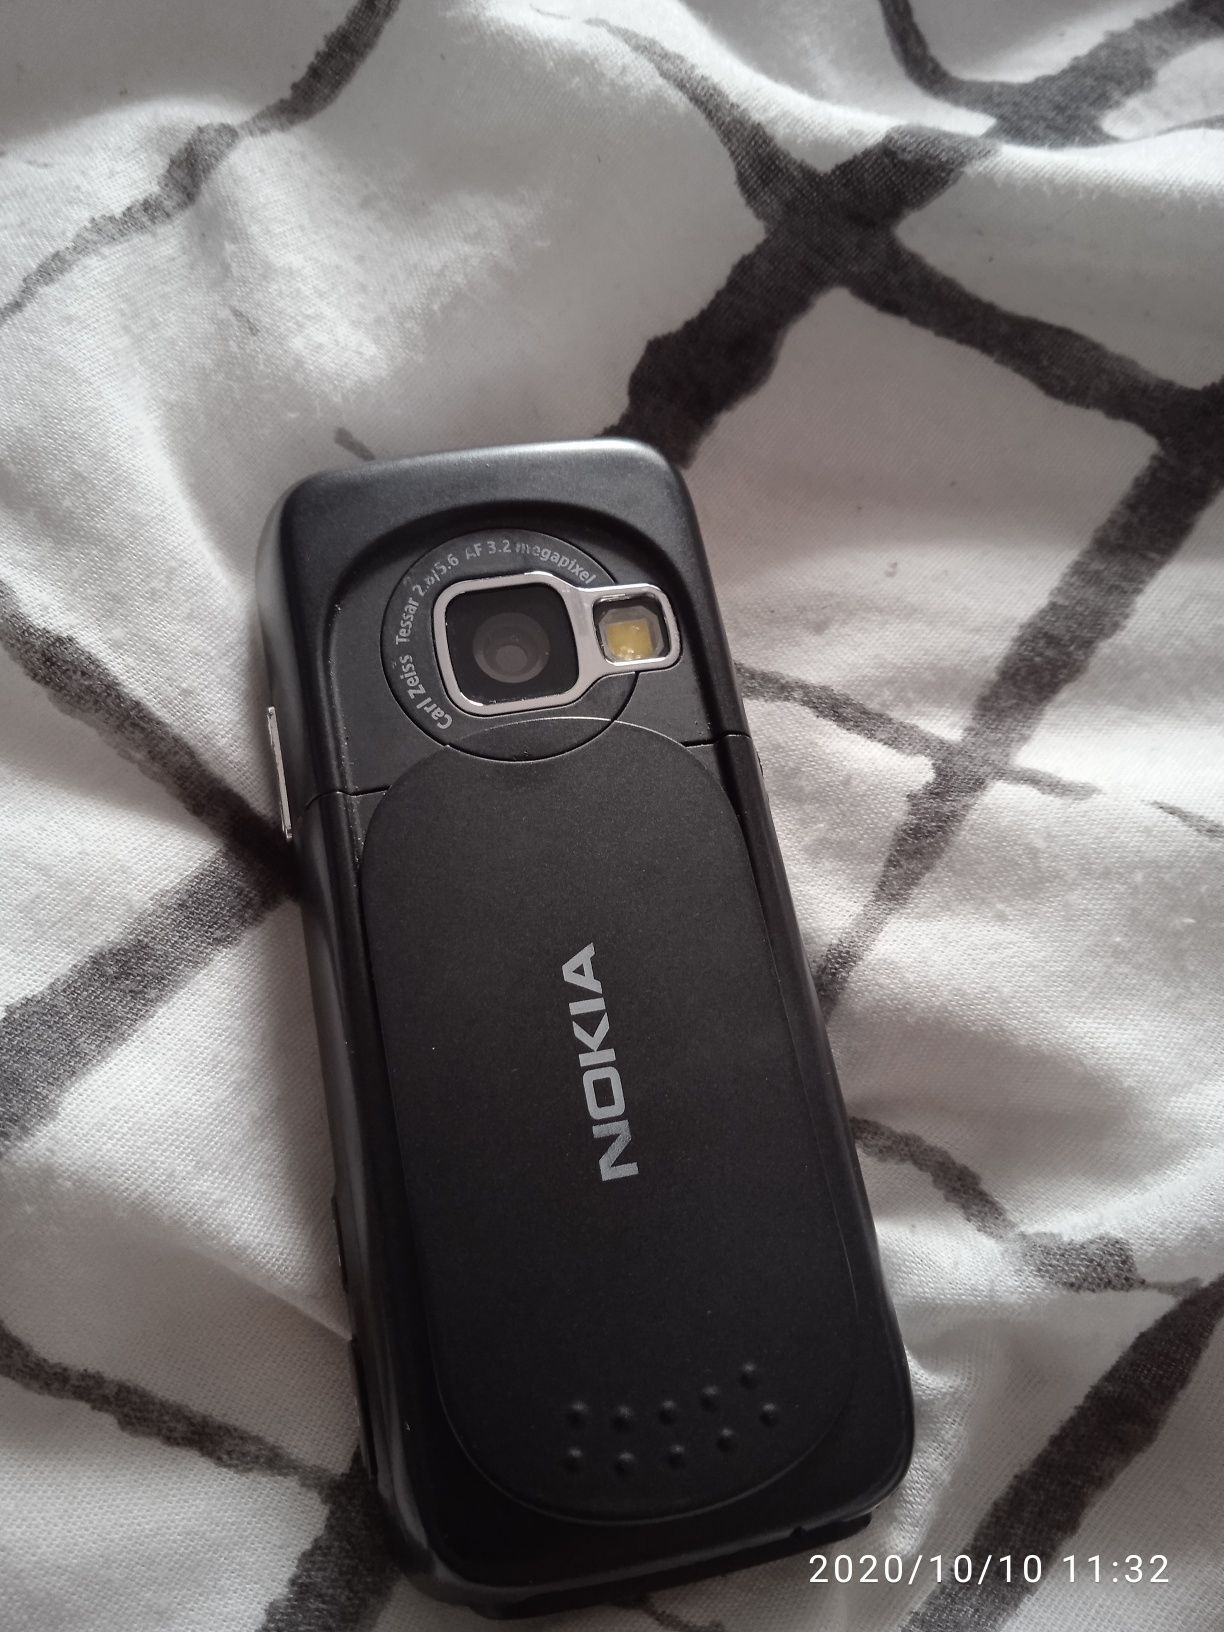 Nokia n73  bez PL Menu